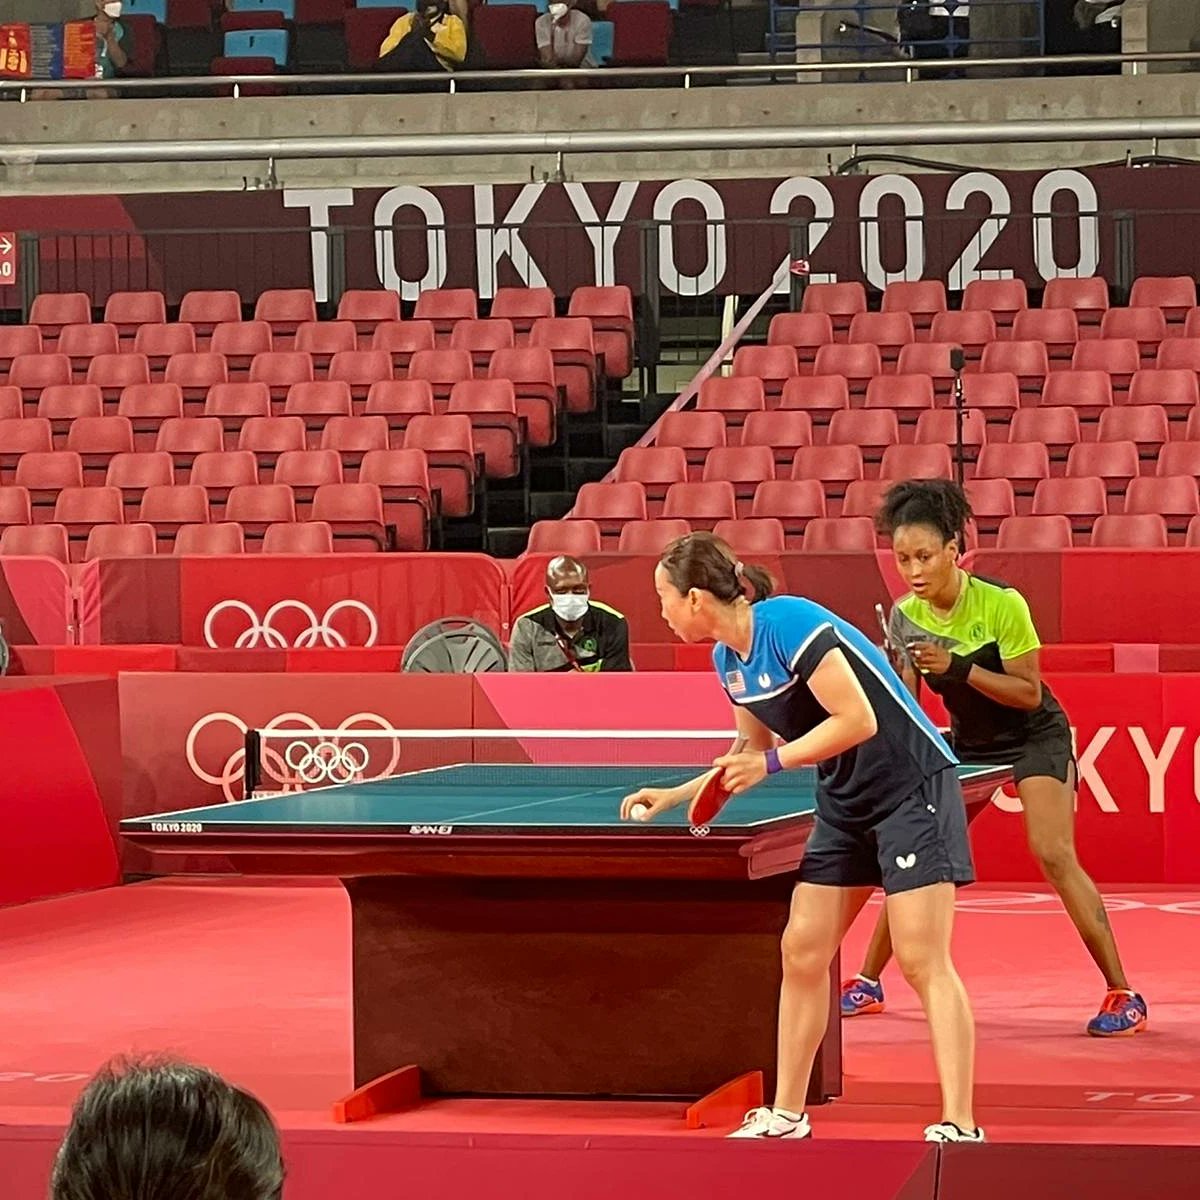 Usa Table Tennis Liu Juan Opens Usa Table Tennis Efforts In 2020 Tokyo Olympics With 4 1 Win Over Olufunke Oshonaike Of Nigeria